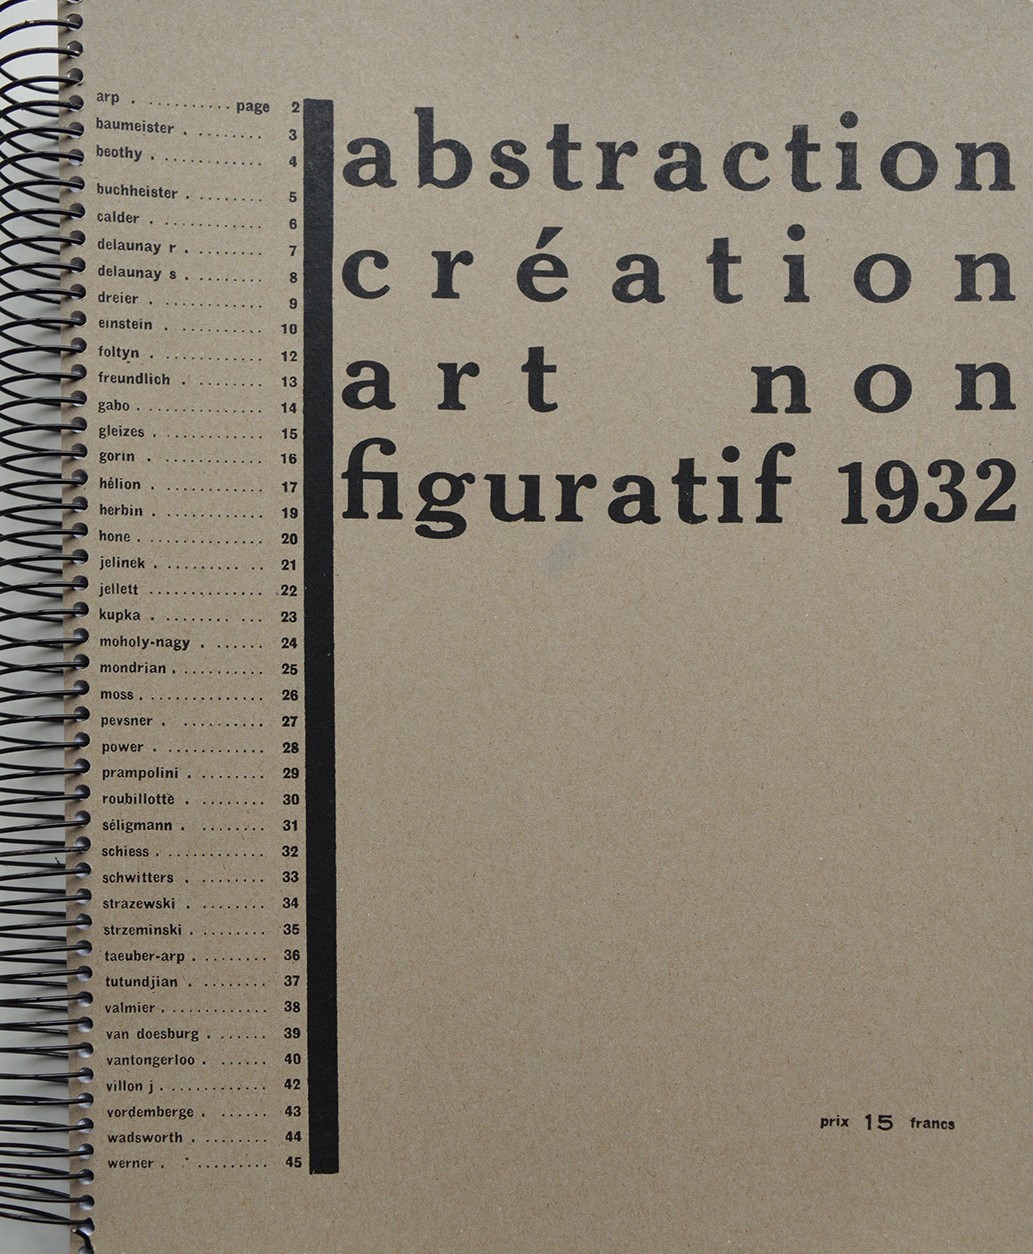 Abstraction création art non figuratif 1932